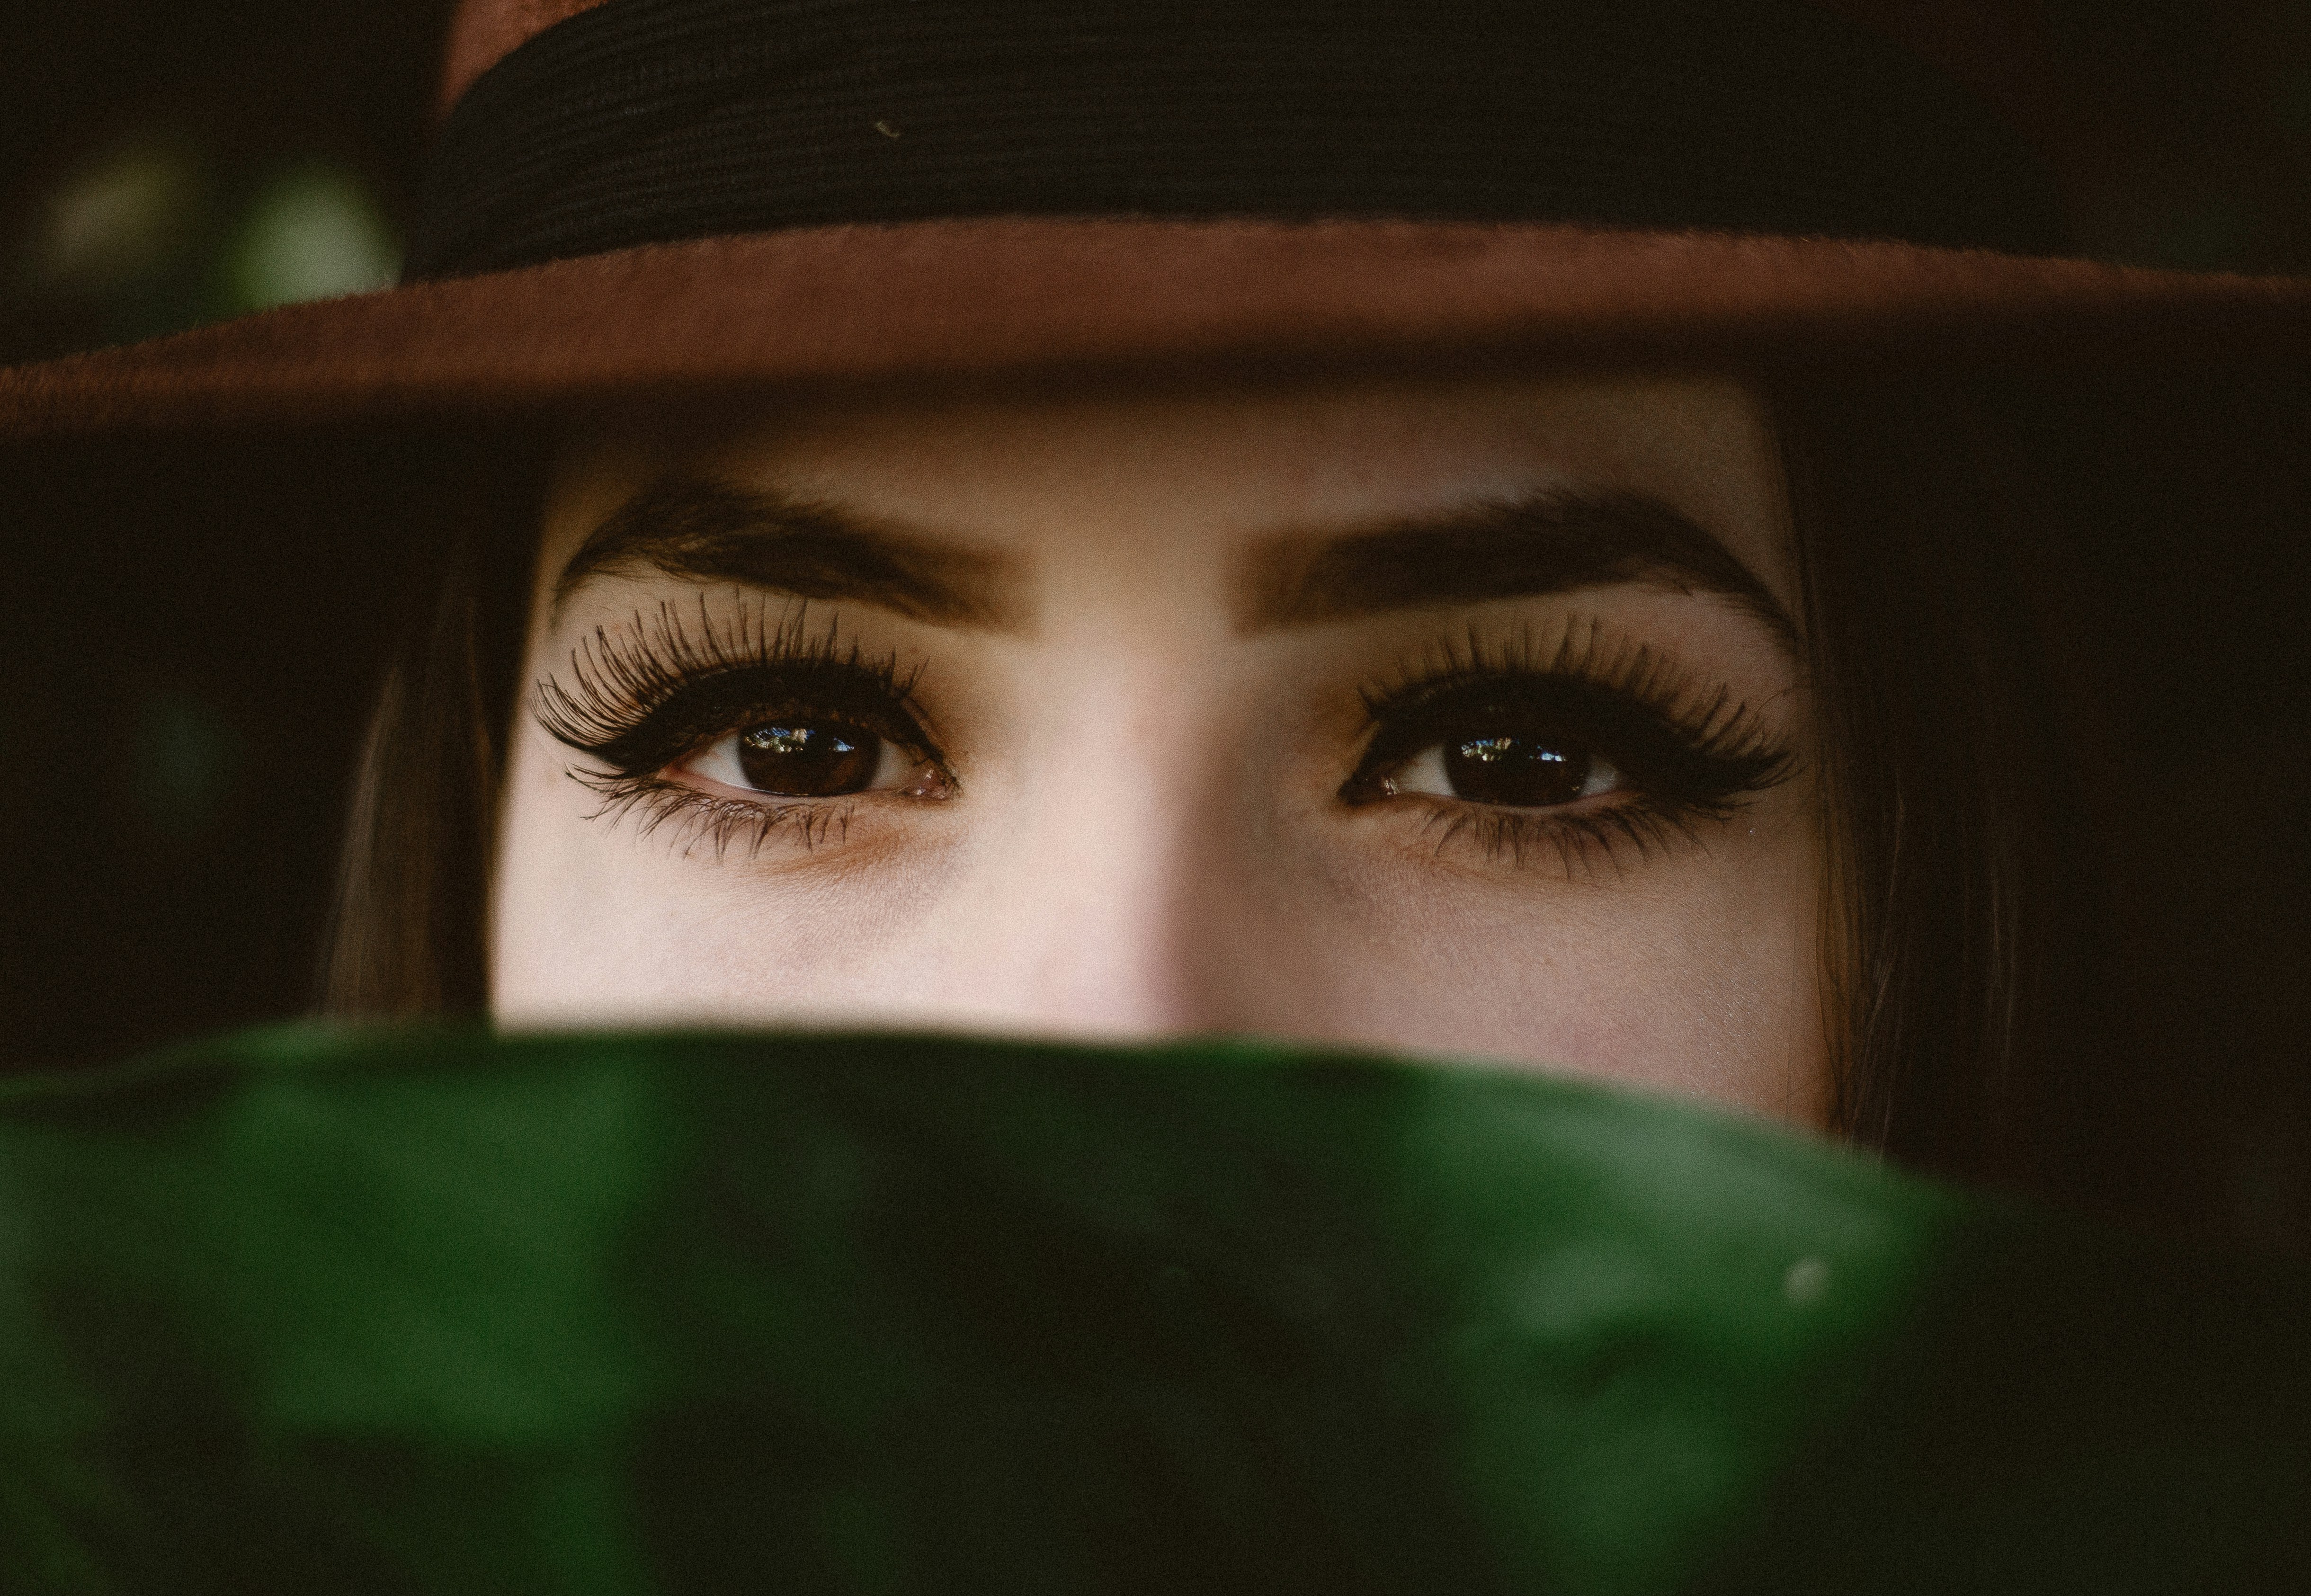 How Can I Prevent False Eyelashes From Poking My Eyelids?